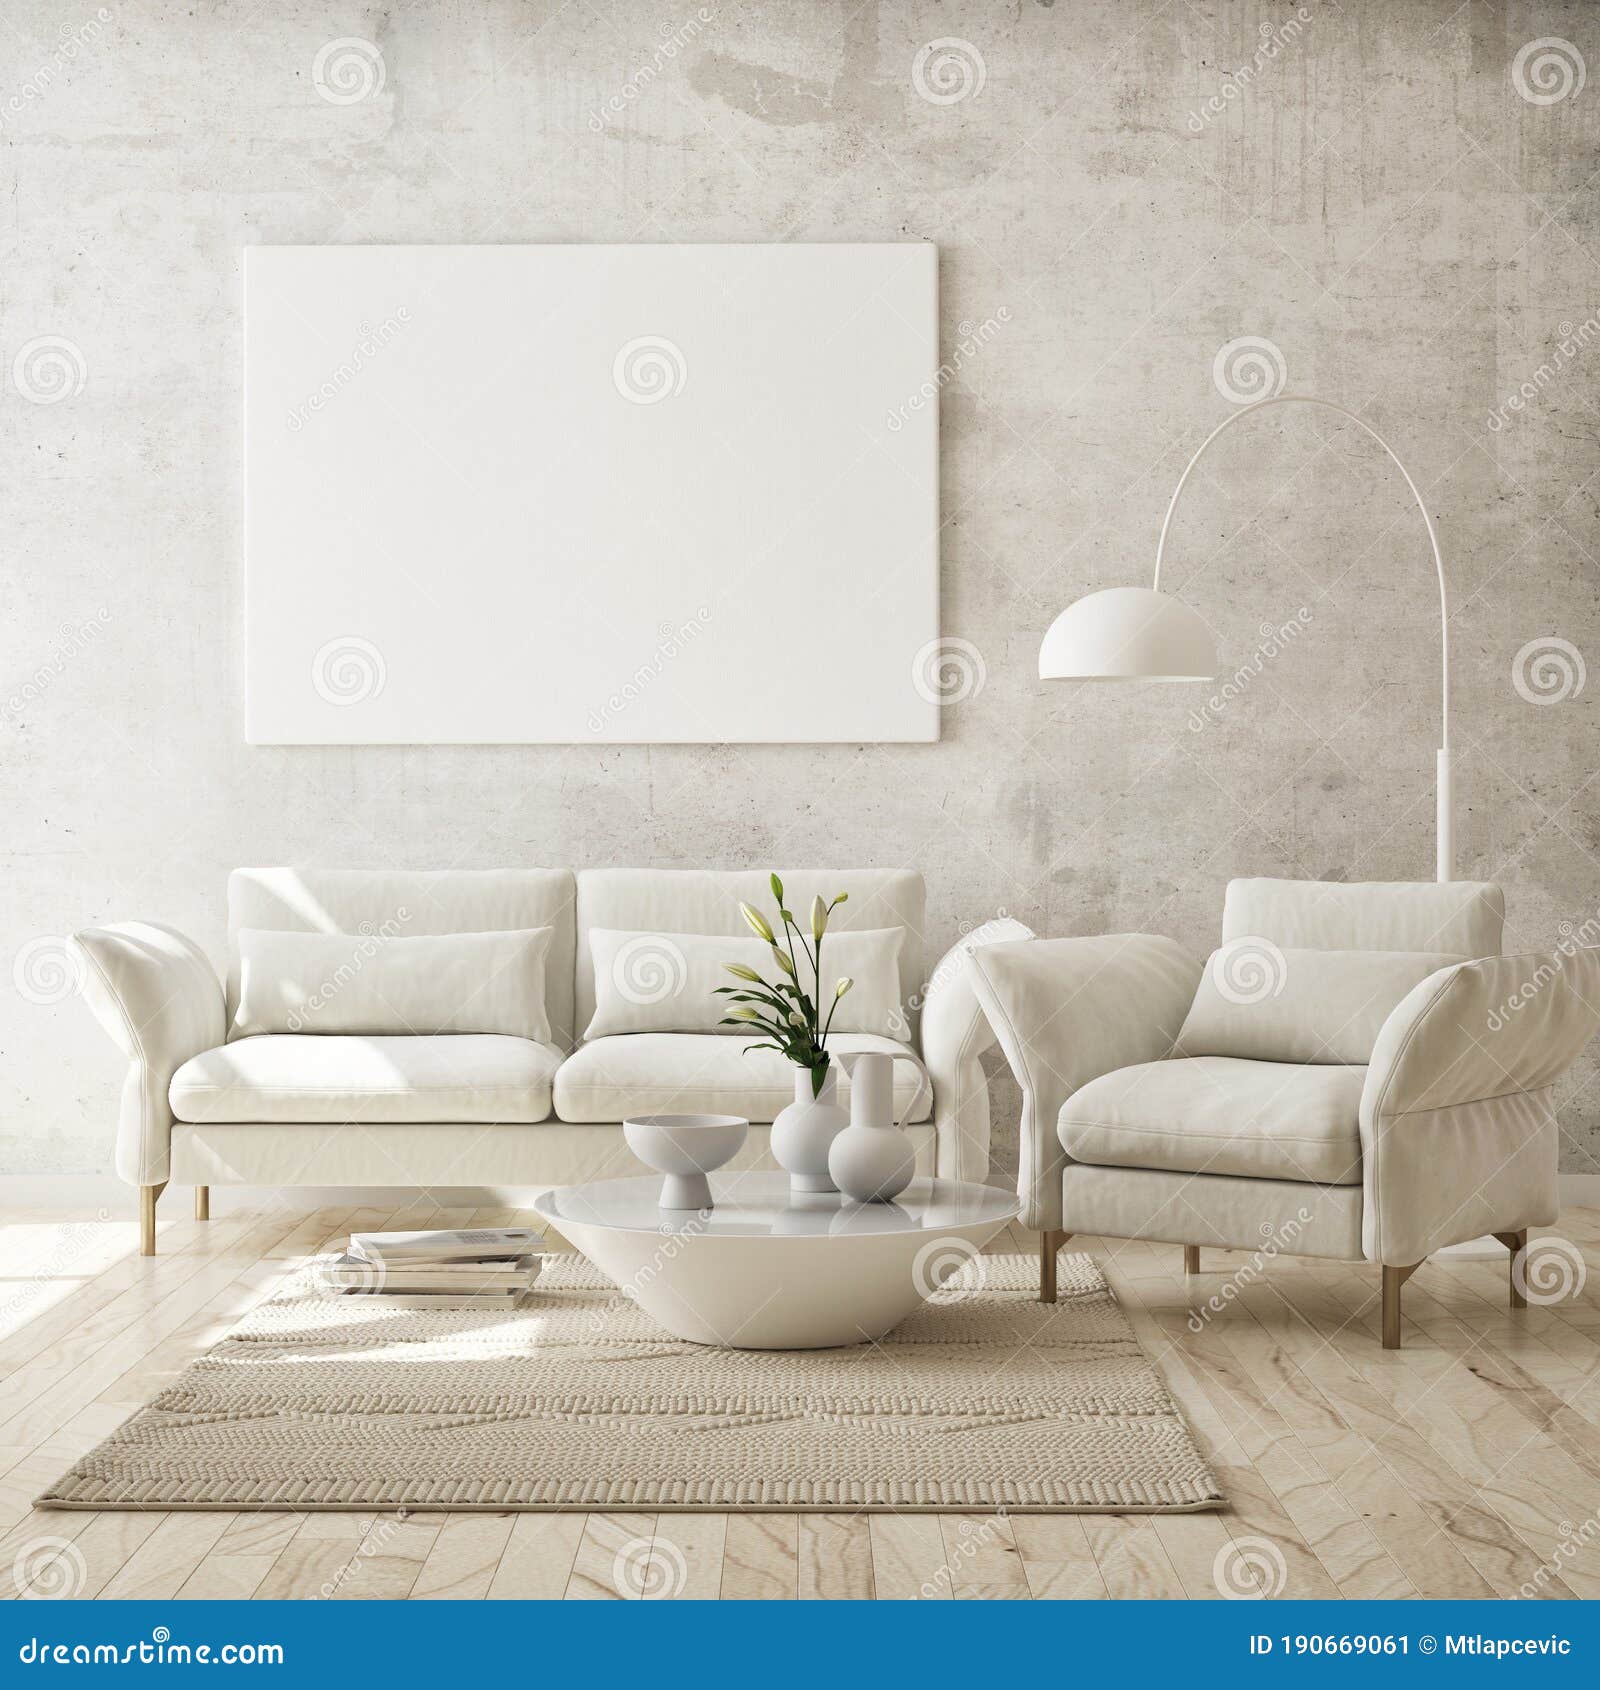 Mock Up Poster Frame in Modern Interior Background, Living Room,  Scandinavian Style, 3D Render Stock Illustration - Illustration of  decorative, blank: 190669061